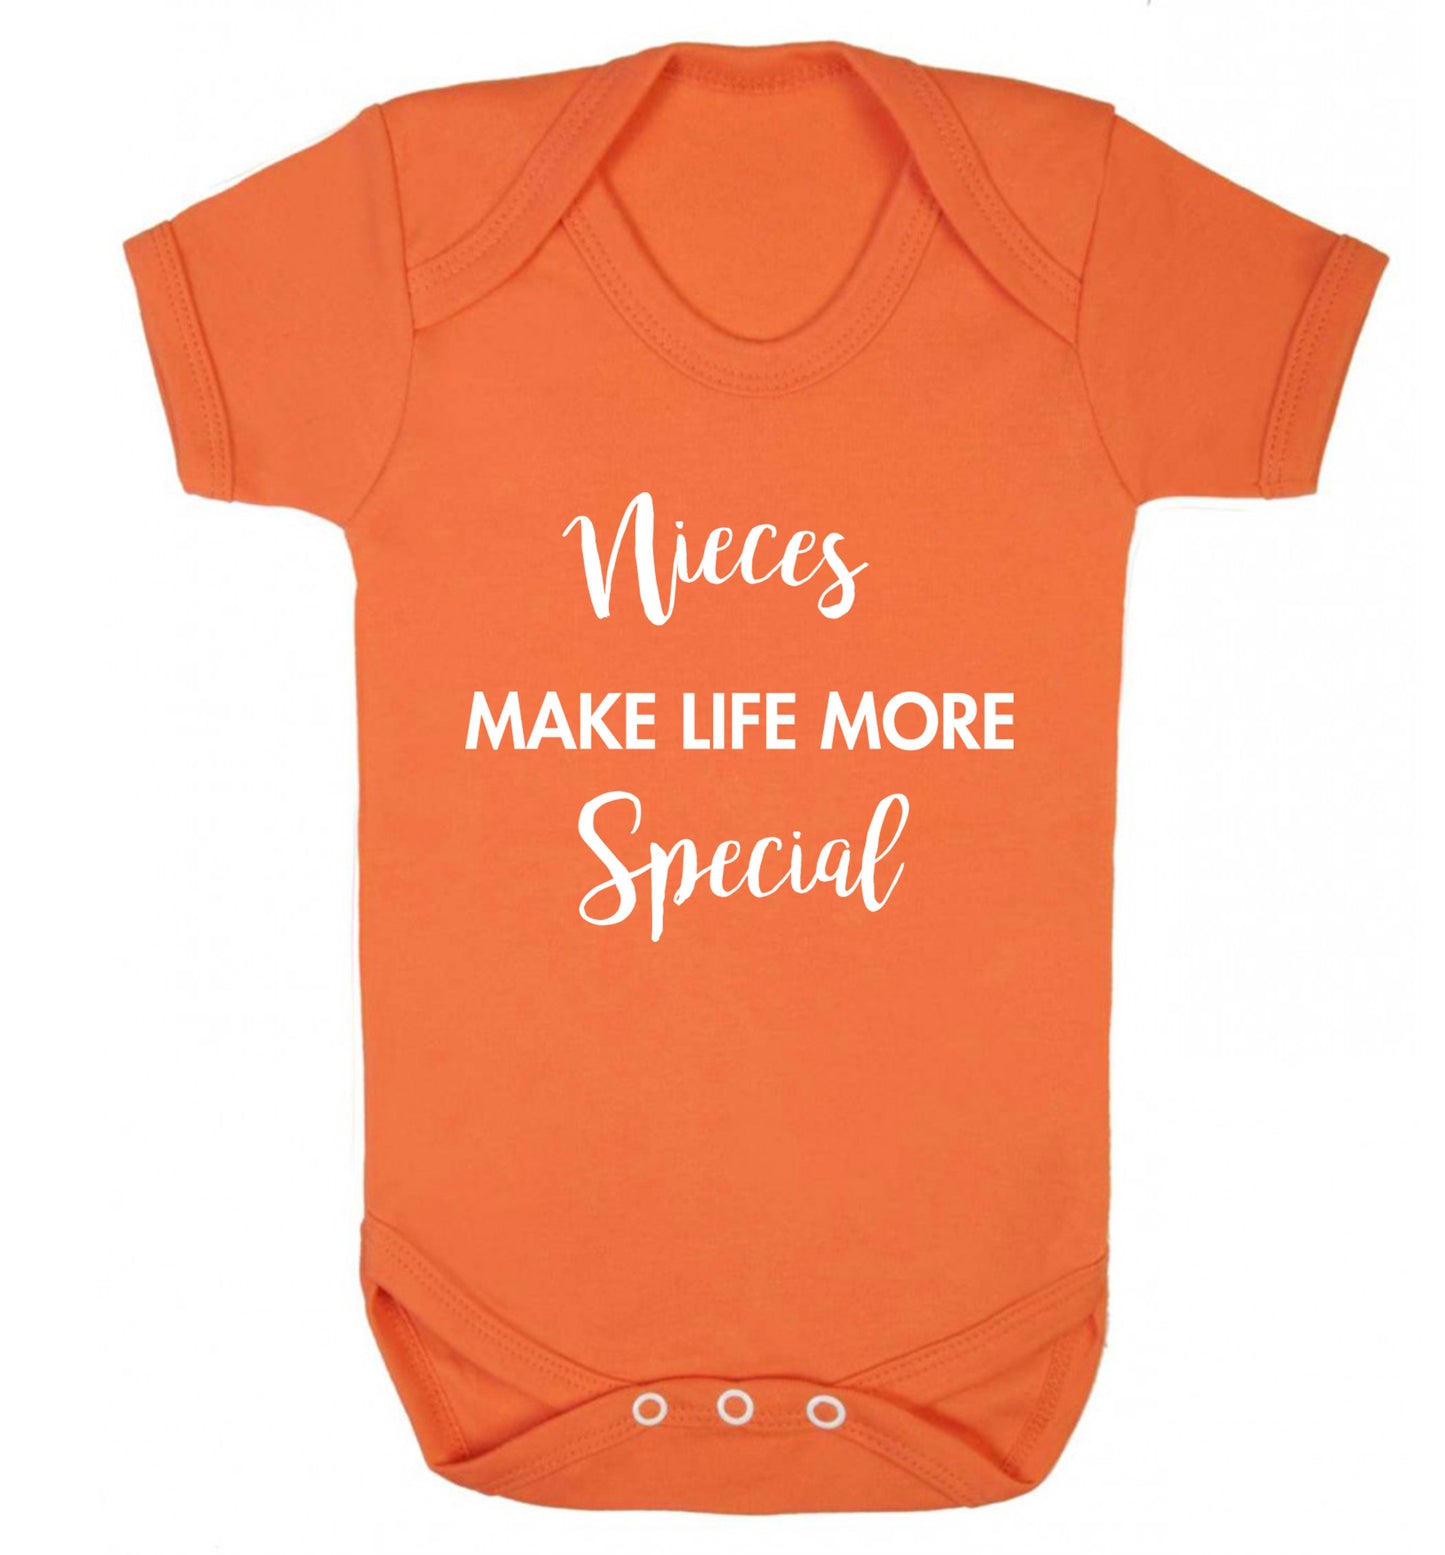 Nieces make life more special Baby Vest orange 18-24 months